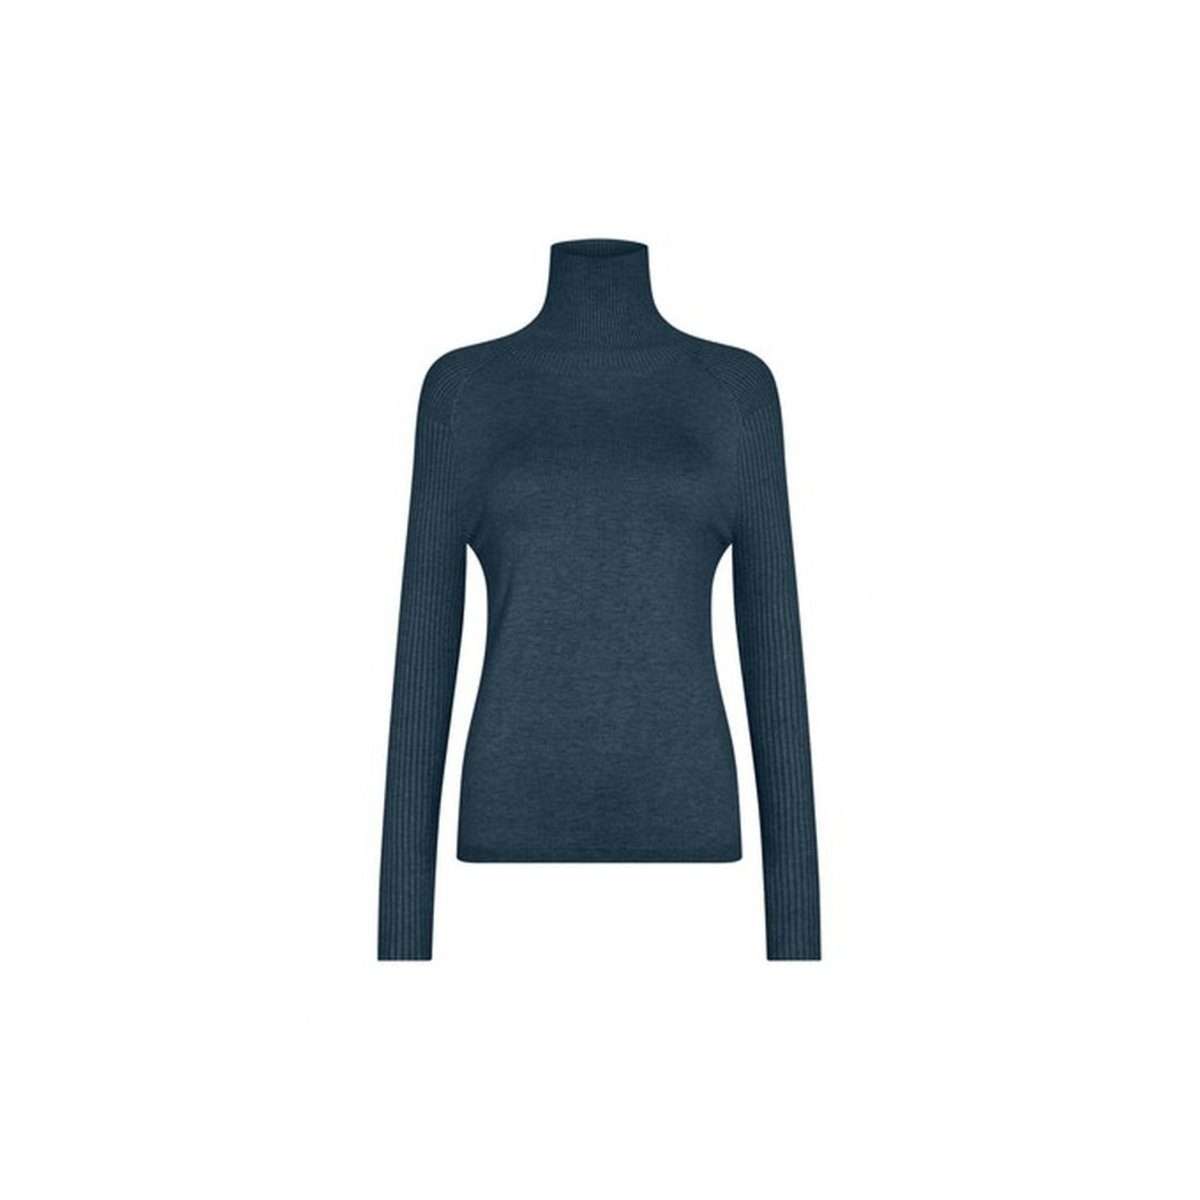 Вязаный свитер синий (1 шт.)